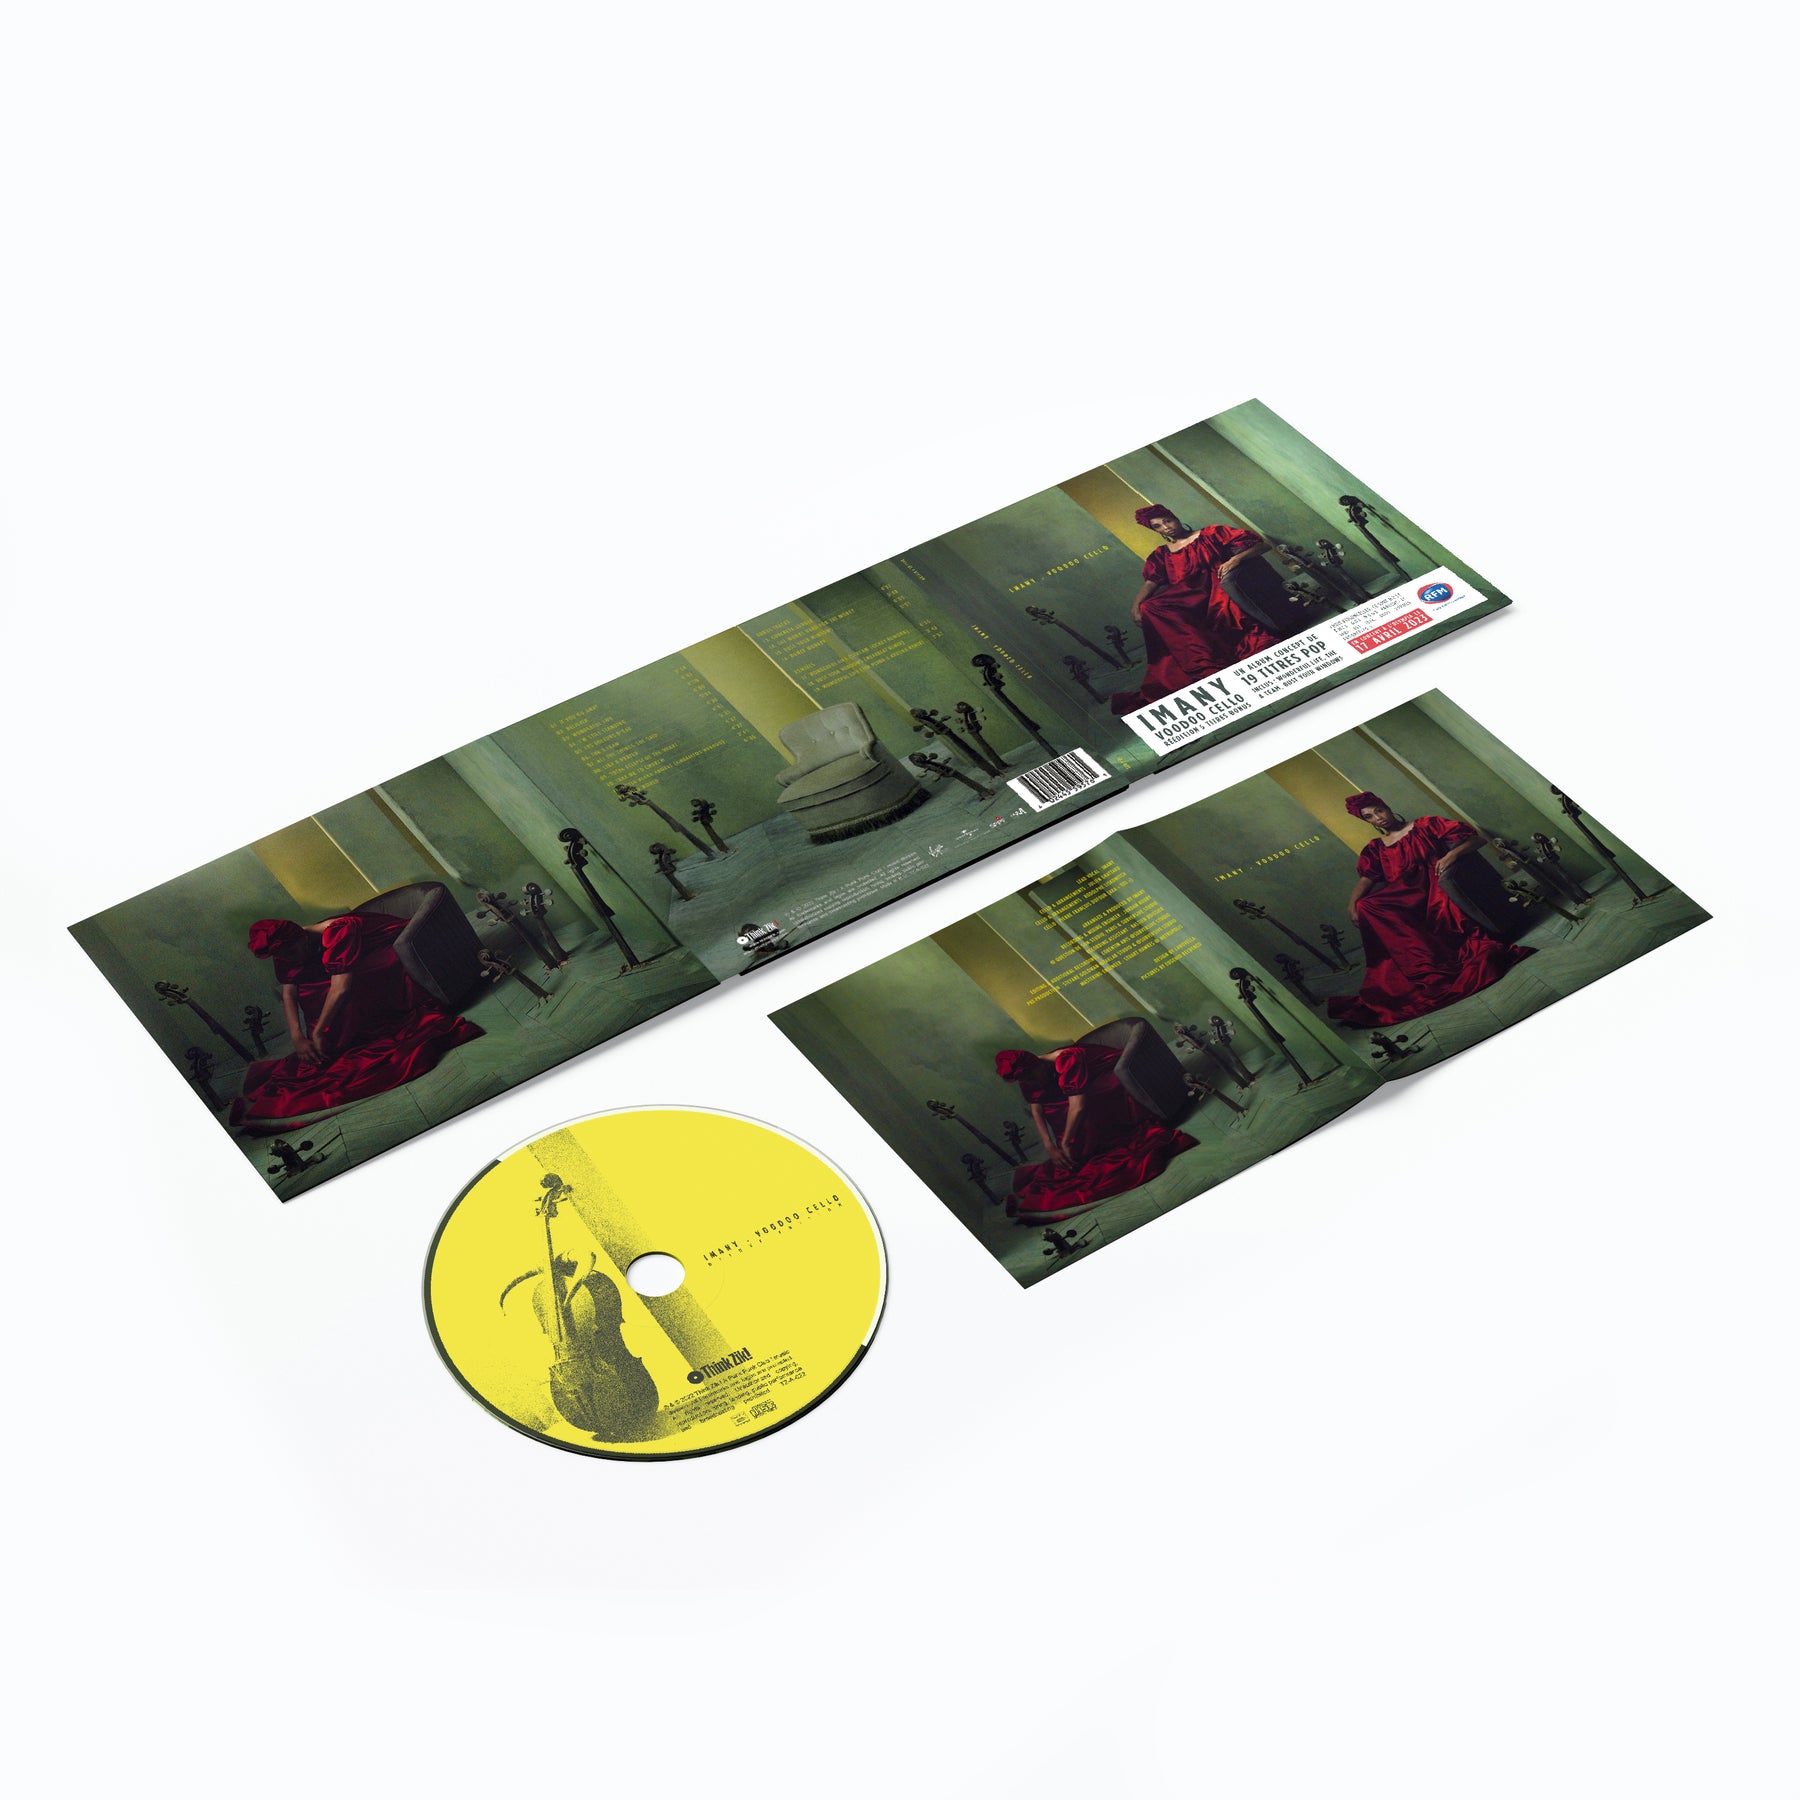 Voodoo Cello (Deluxe Edition) - CD